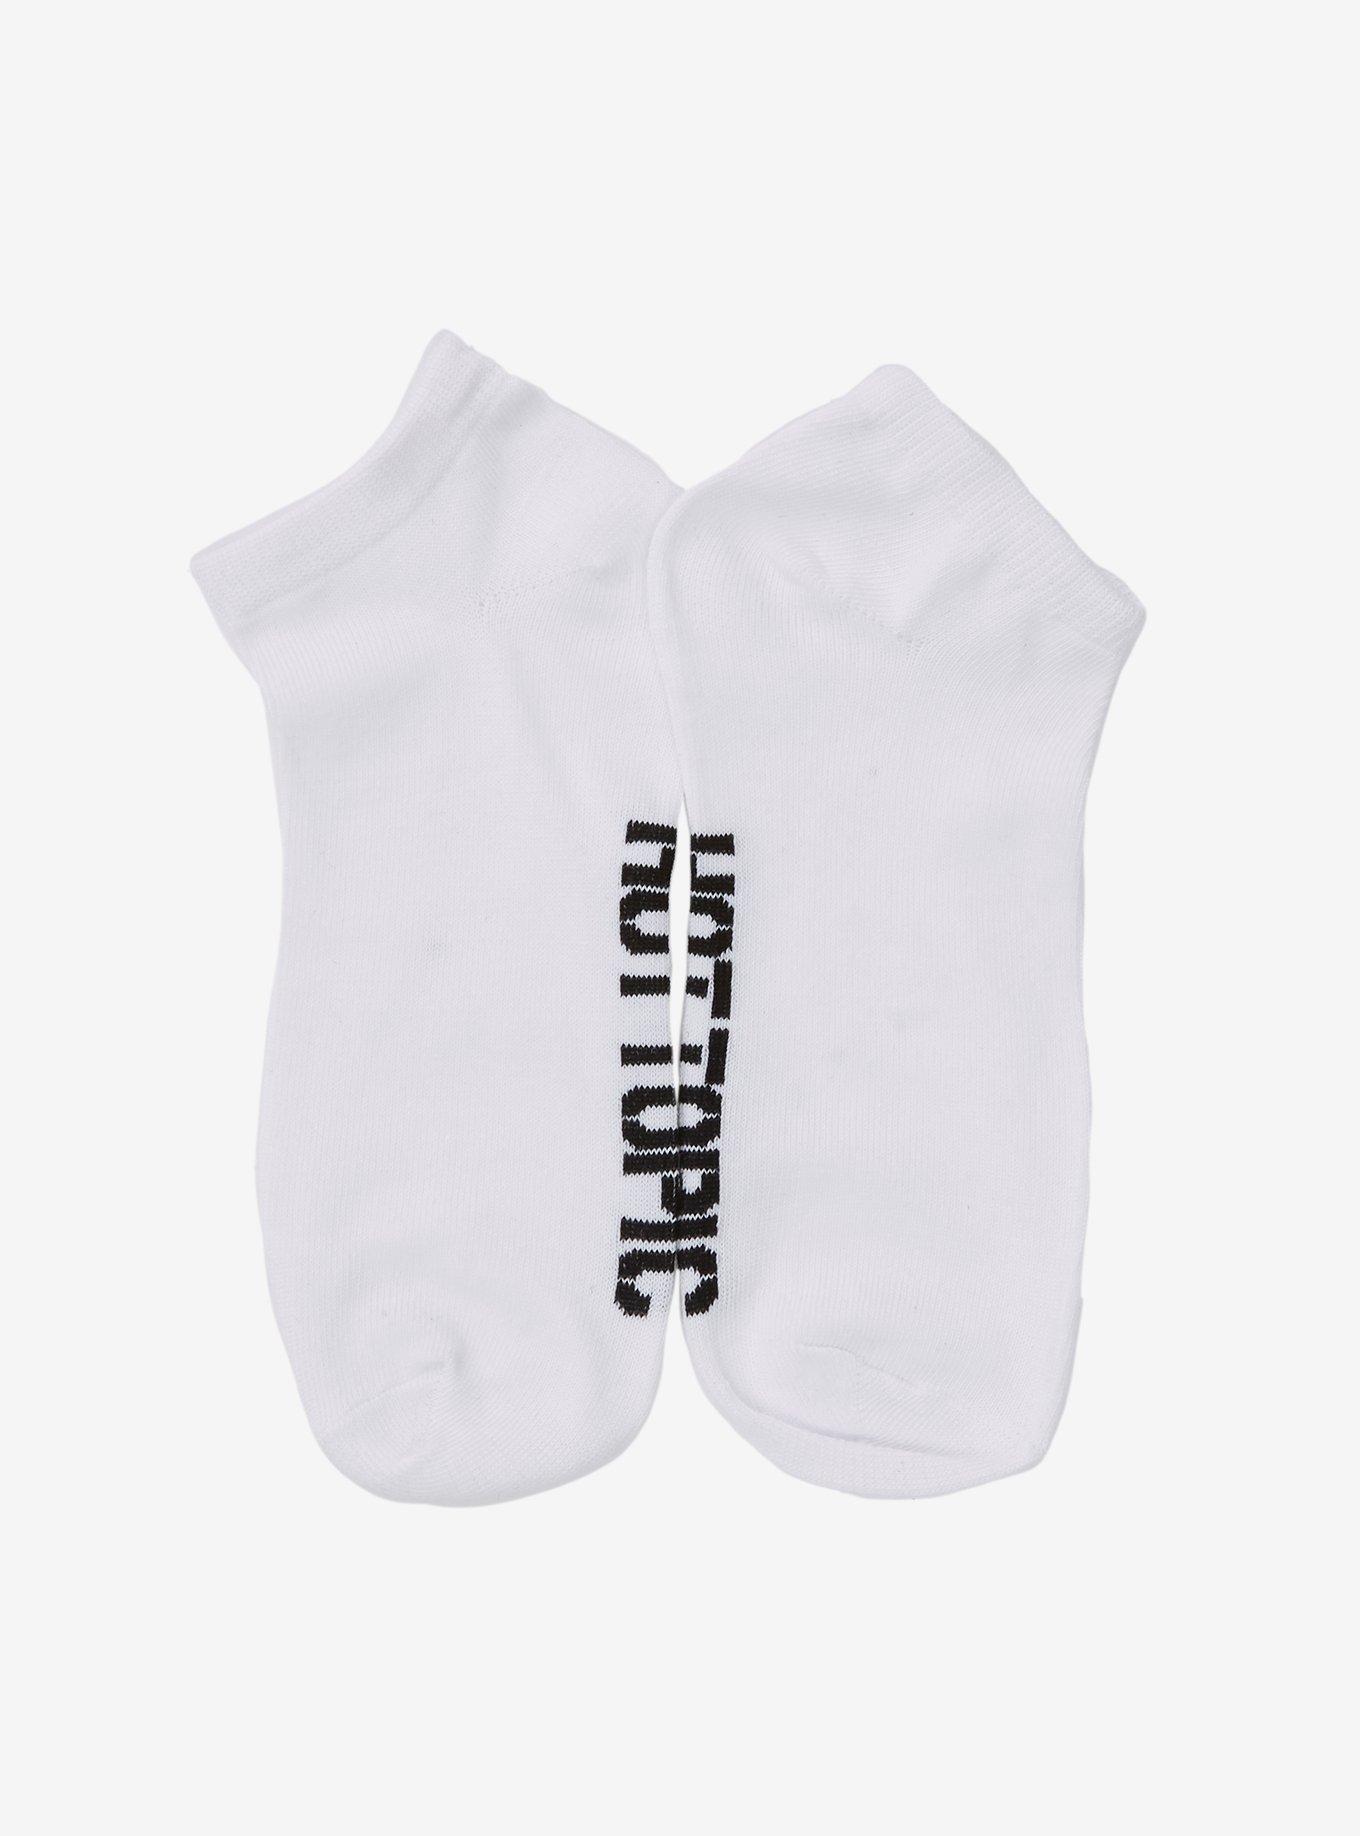 Hot Topic White Ankle Socks, , hi-res